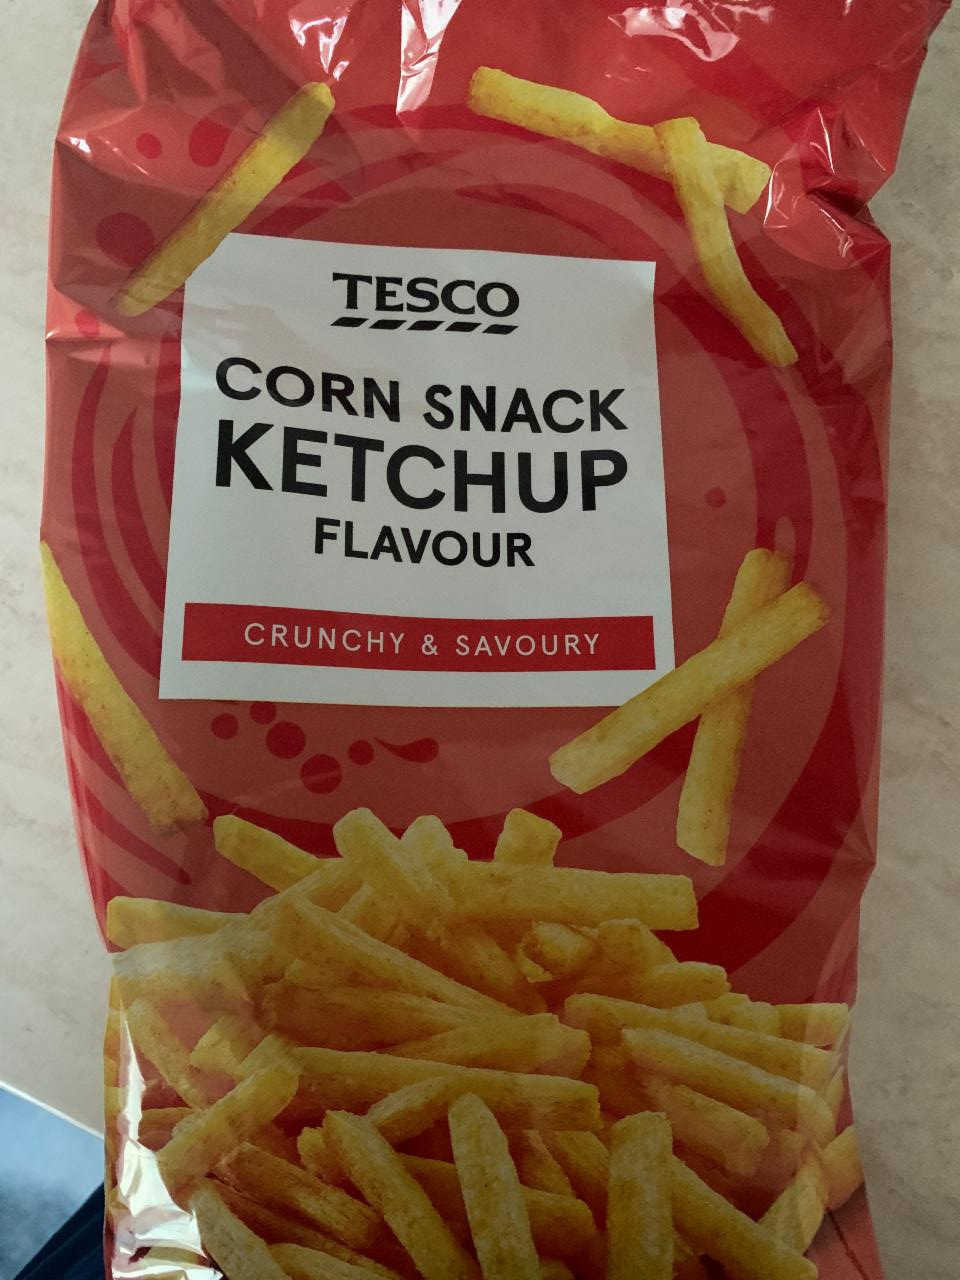 Képek - Corn snack ketchup flavour Tesco